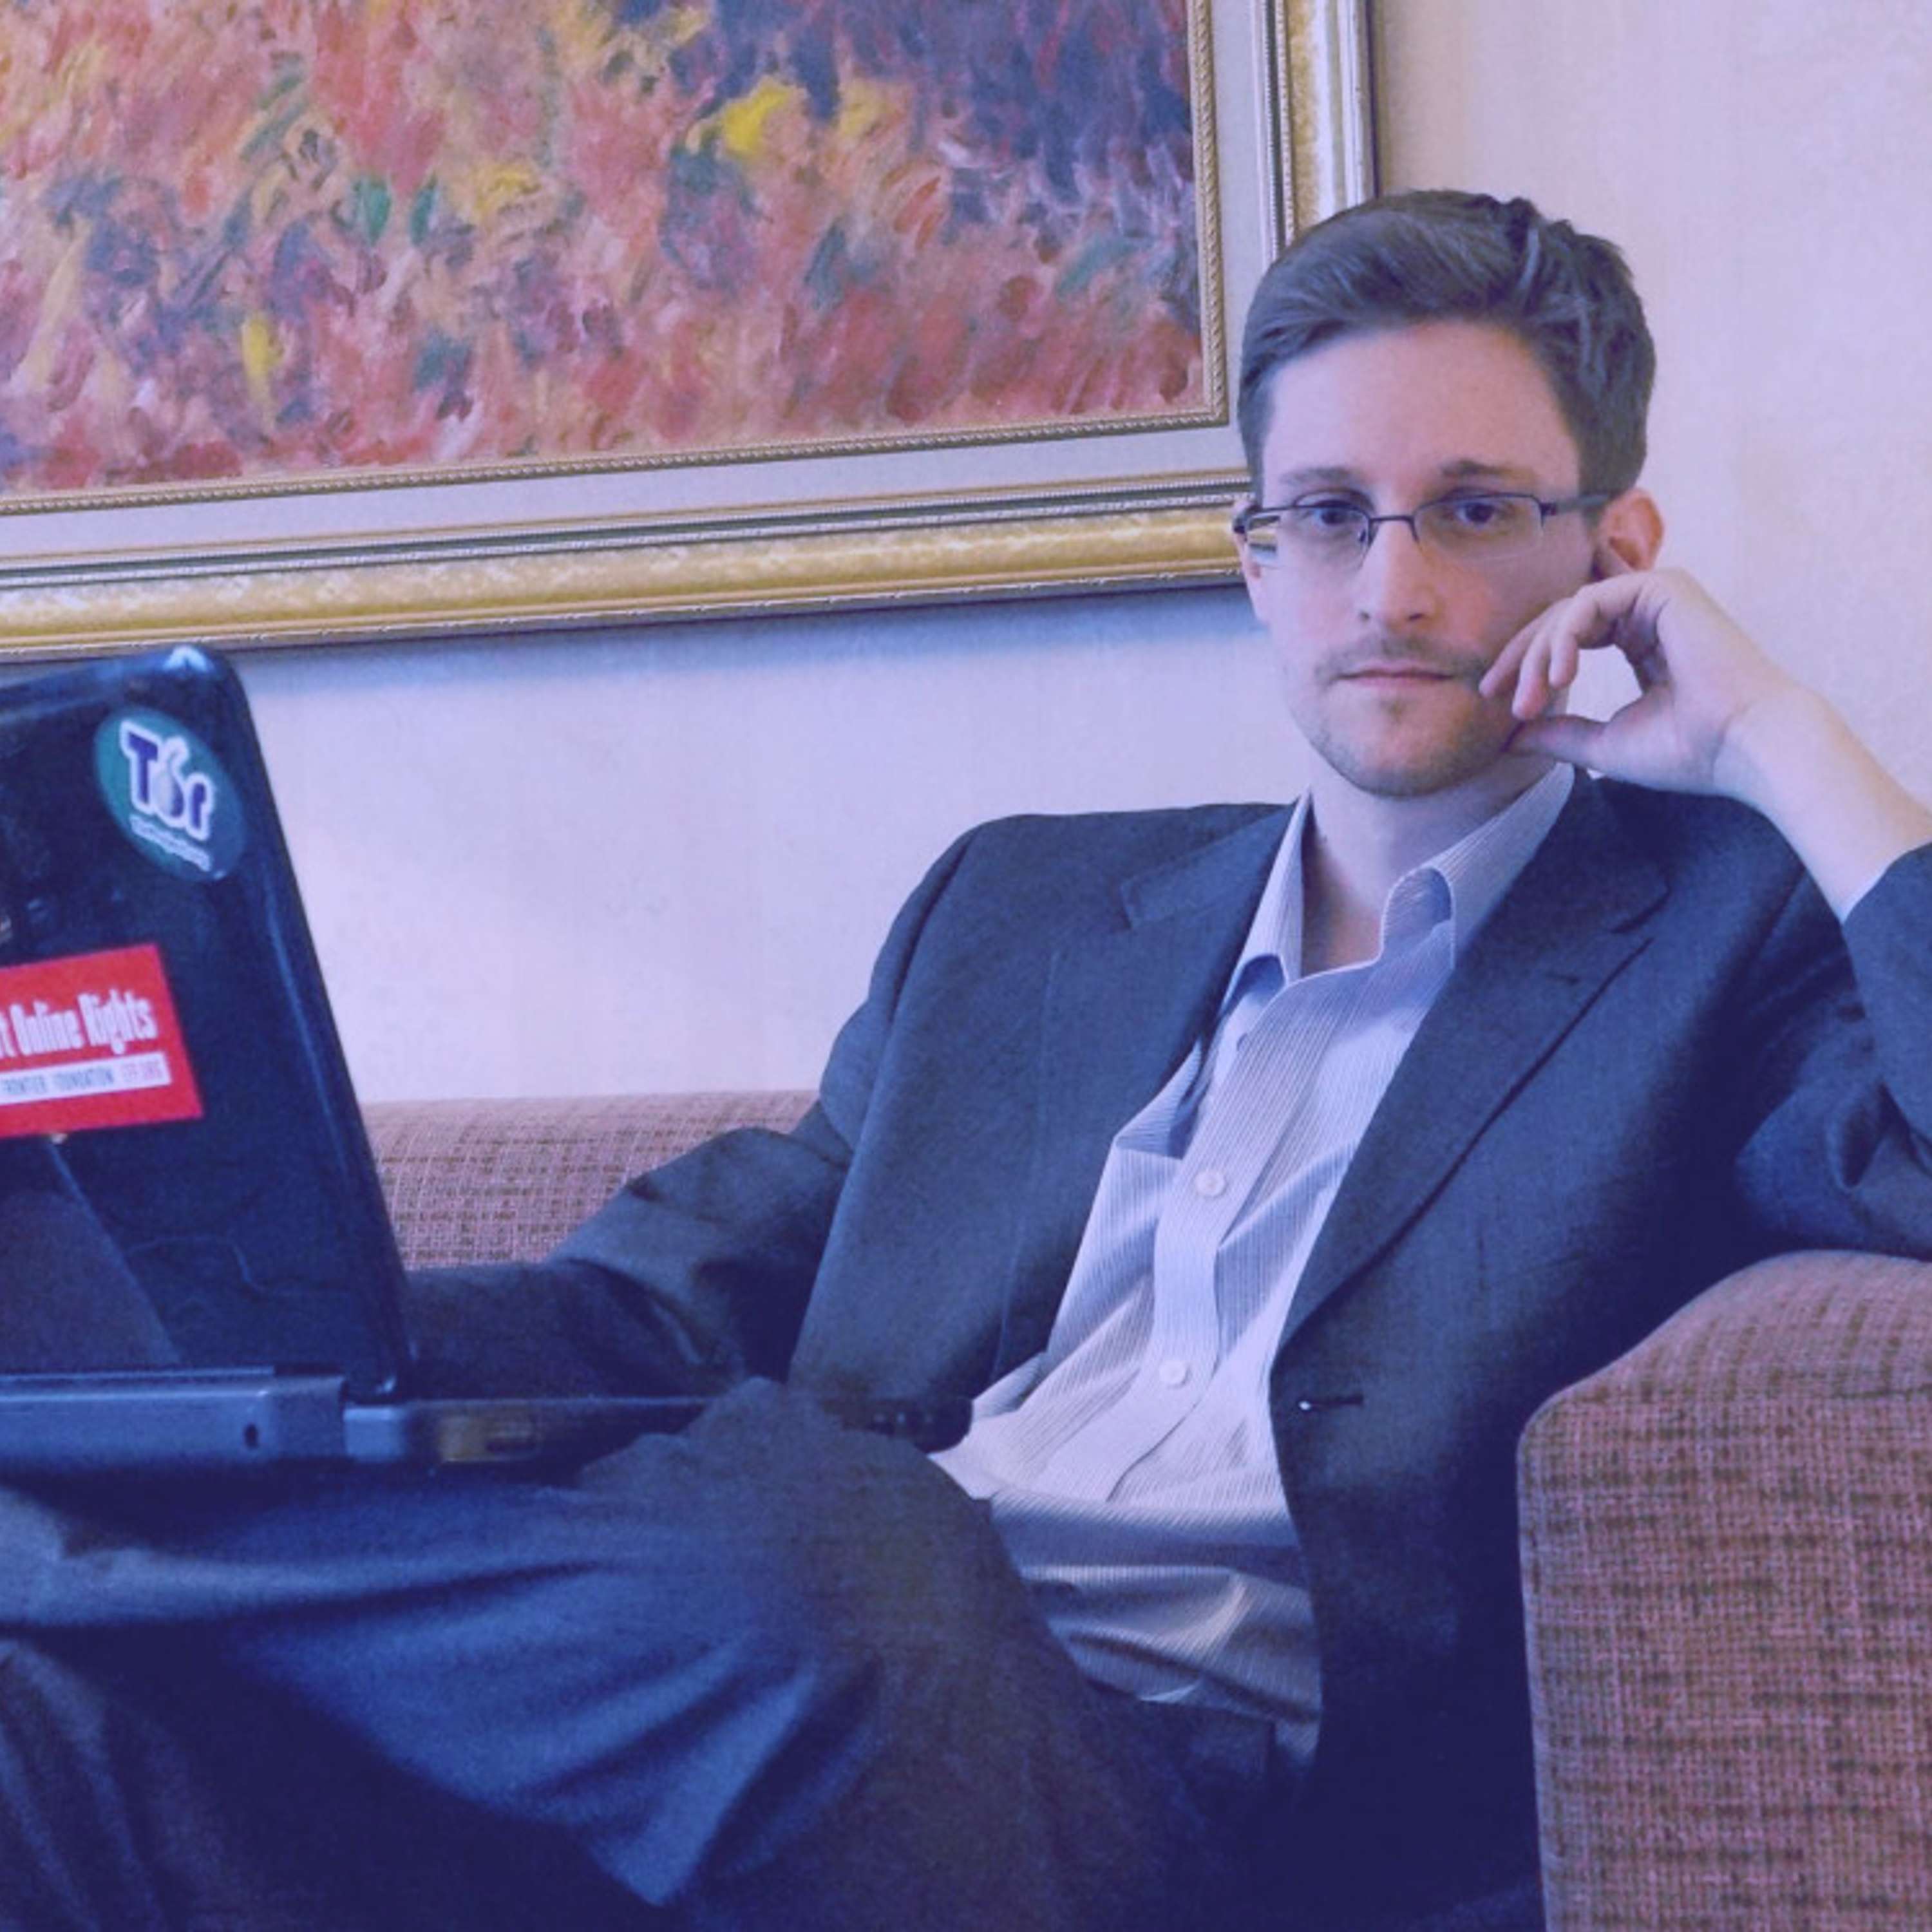 #434 | Edward Snowden | American Patriot or Traitor?